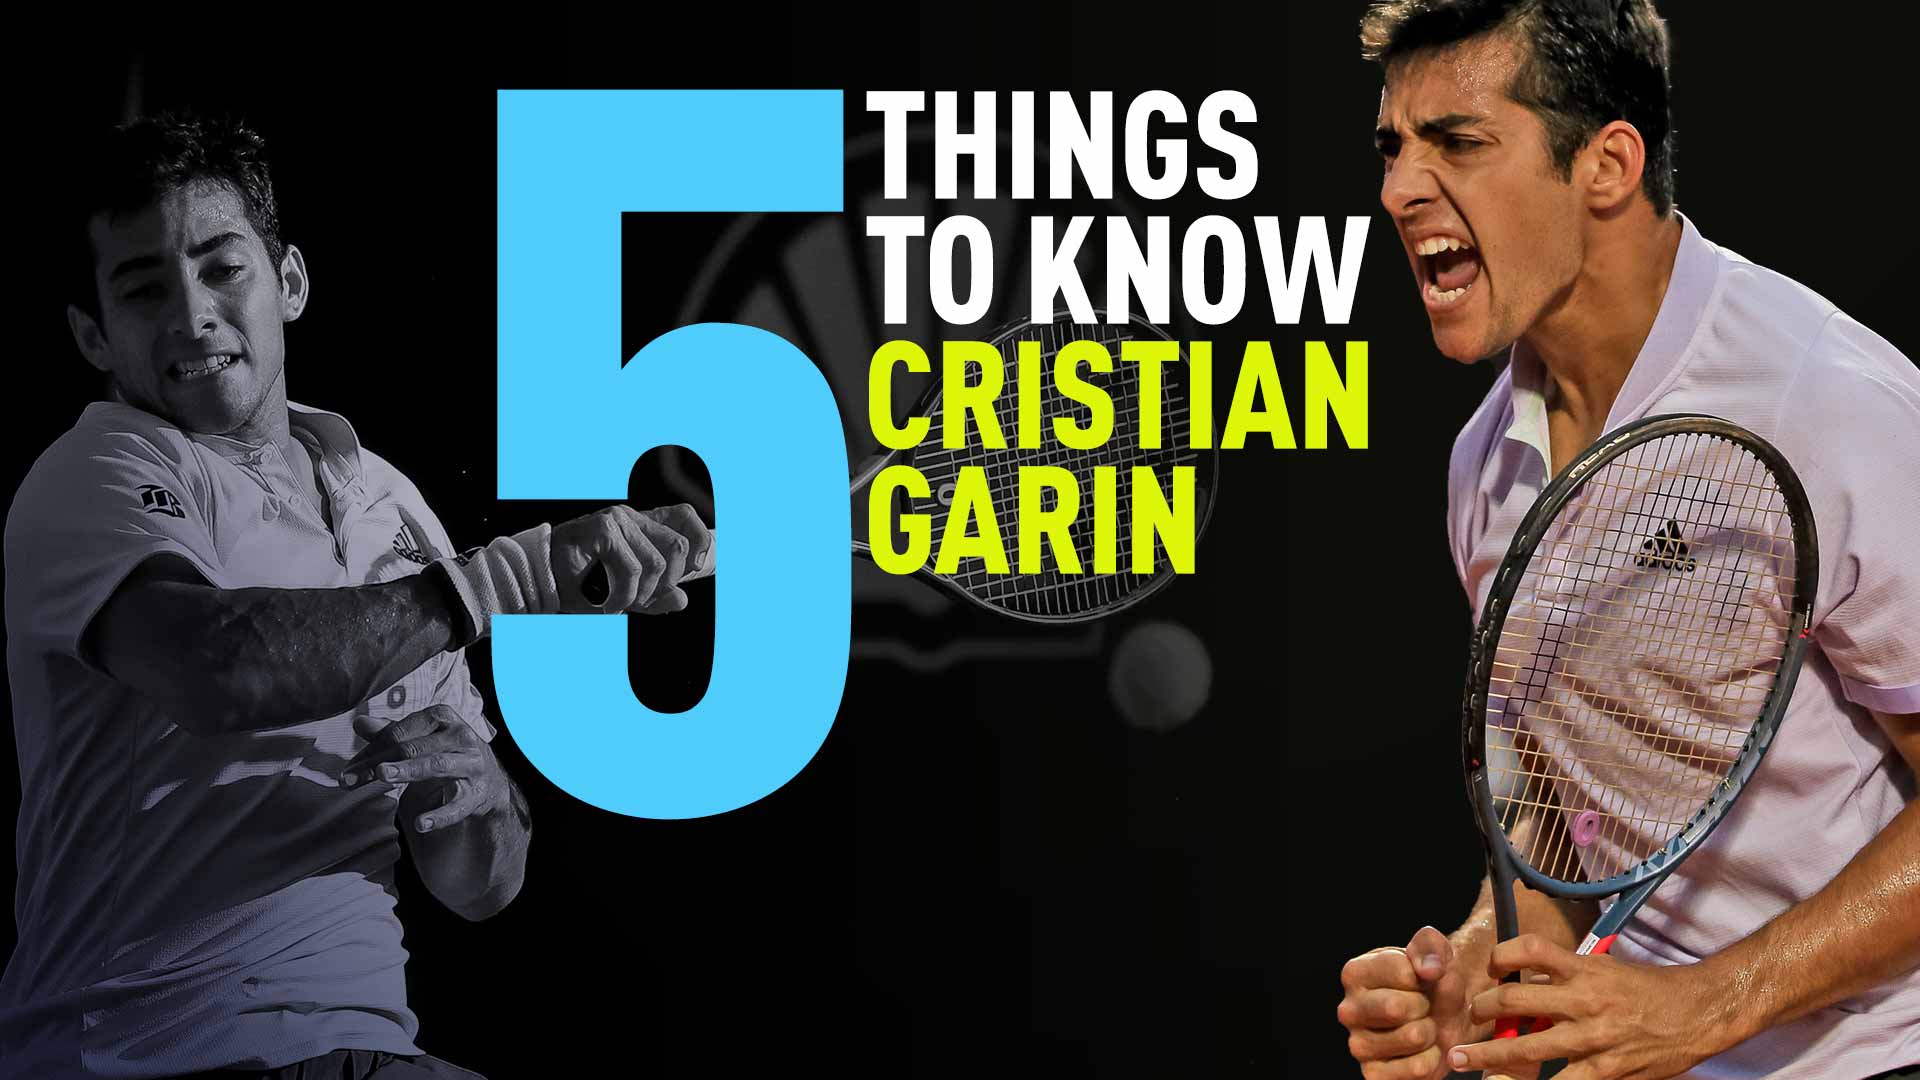 Cristian Garin has won four ATP Tour titles since the start of the 2019 season.